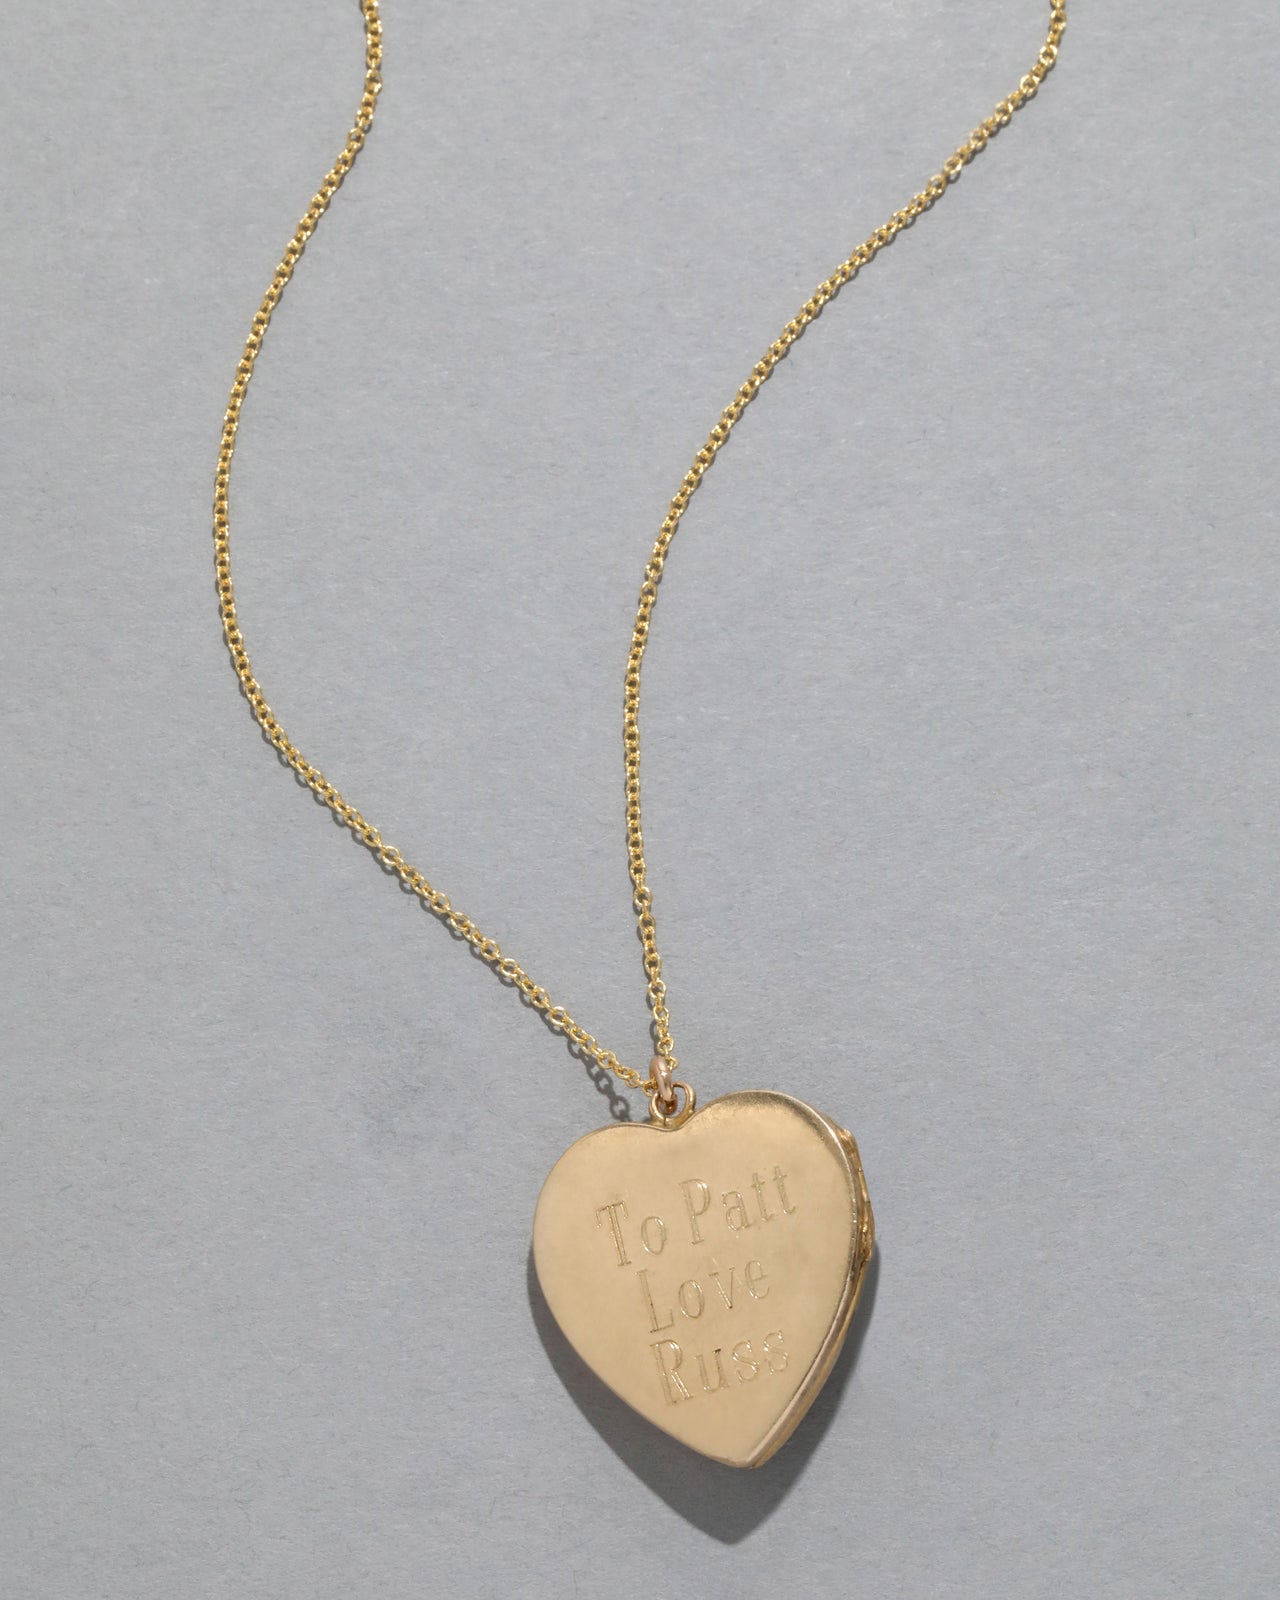 Antique 1920s 14k Gold Etched Heart Locket Necklace - Photo 2